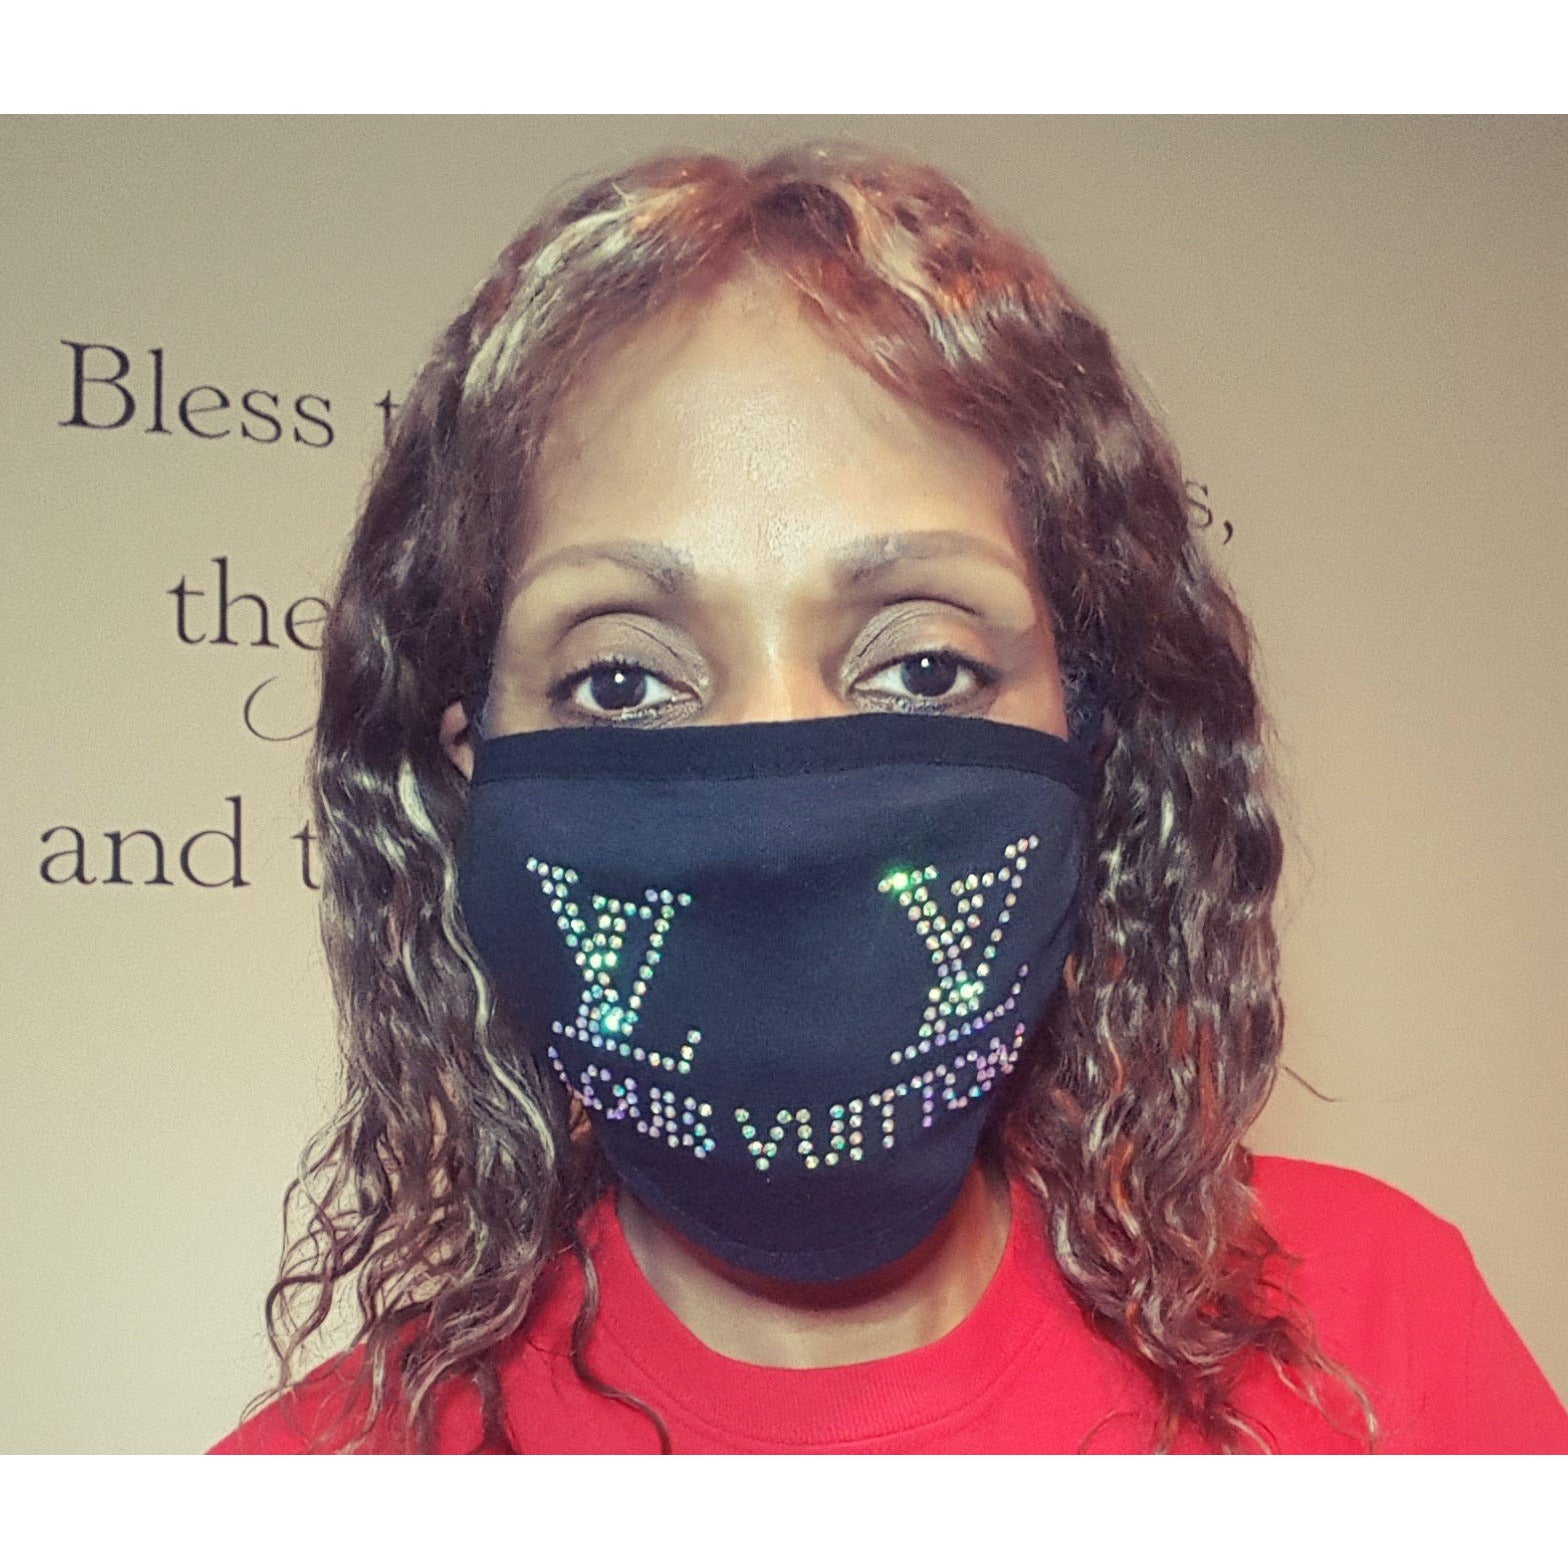 LV Bling Inspired Face Mask with Filter - Inspire Me Positive, LLC